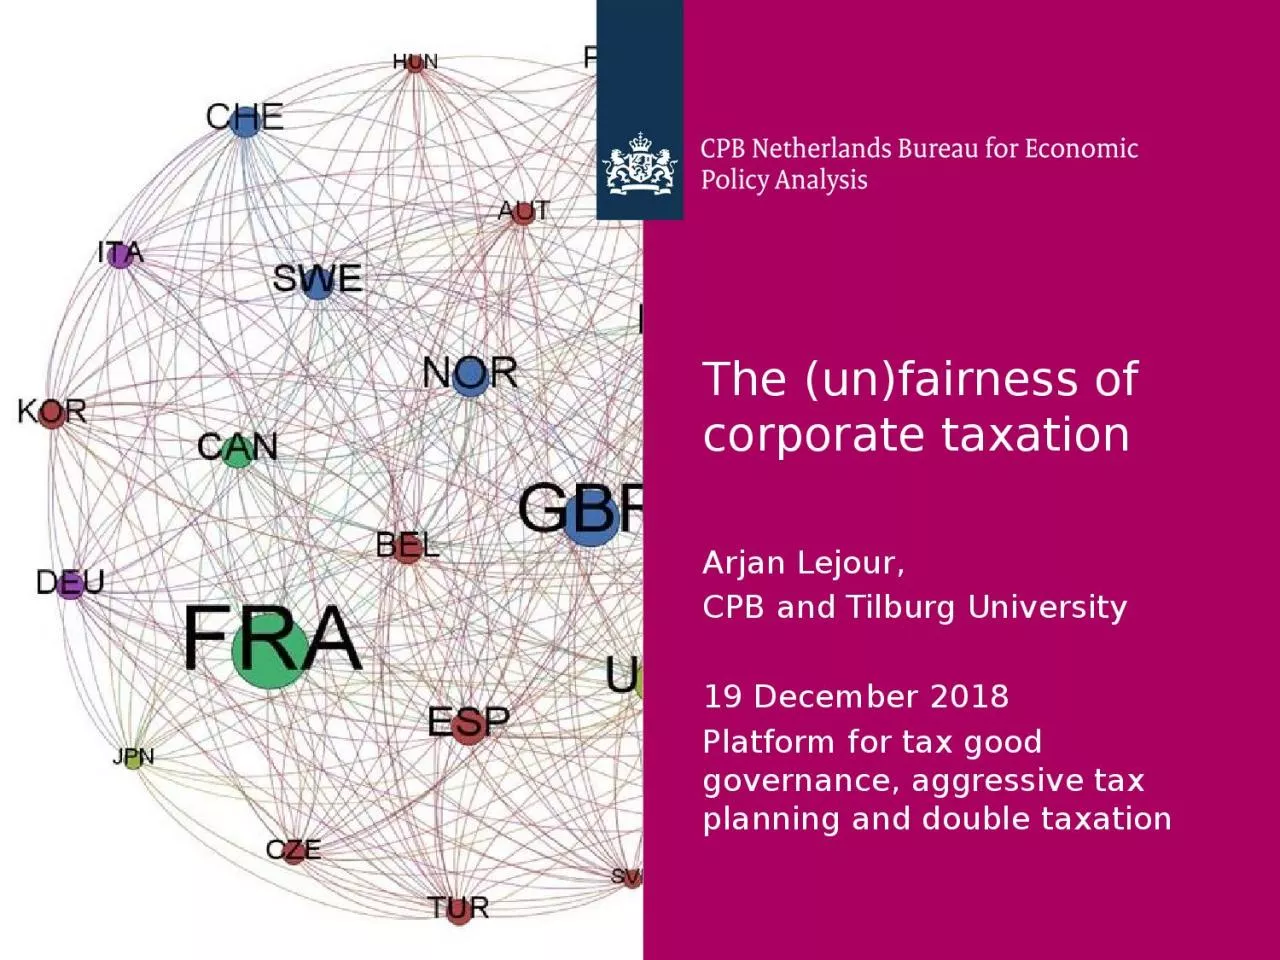 The (un)fairness of corporate taxation